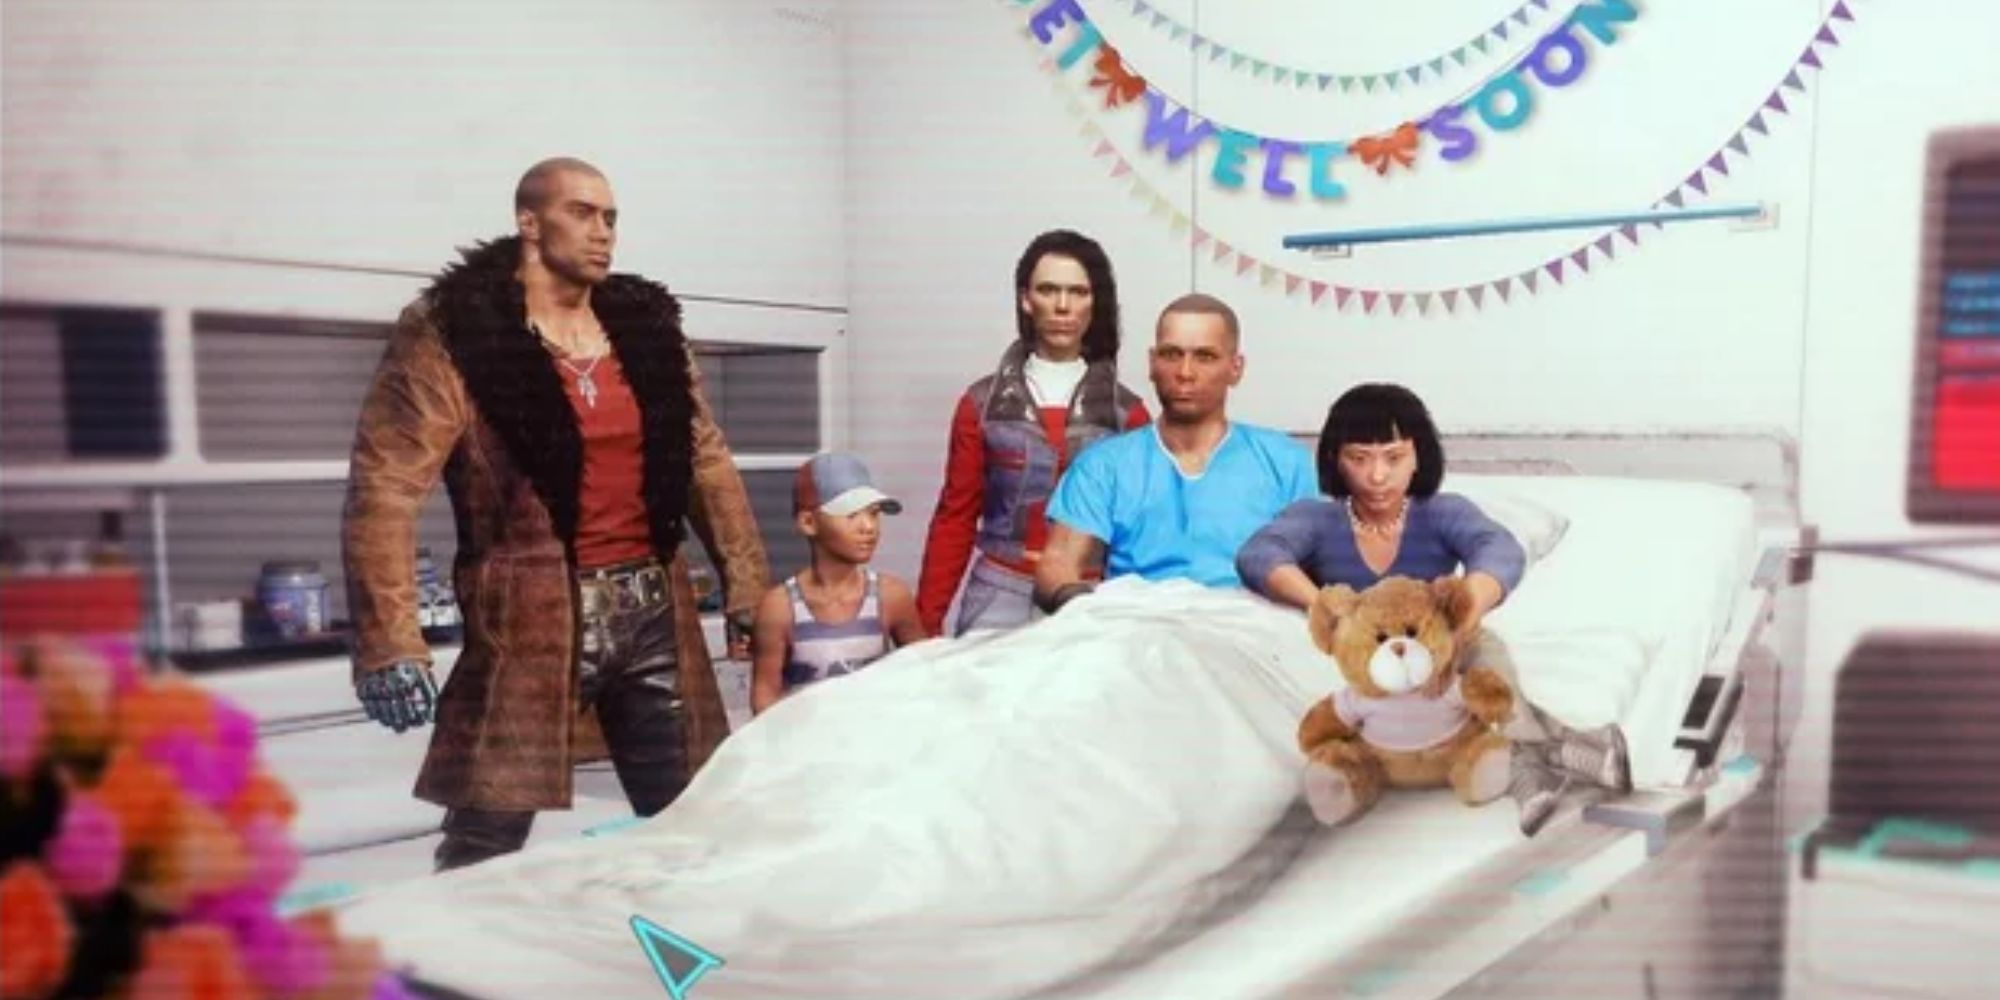 cyberpunk-river-family-photo-hospital